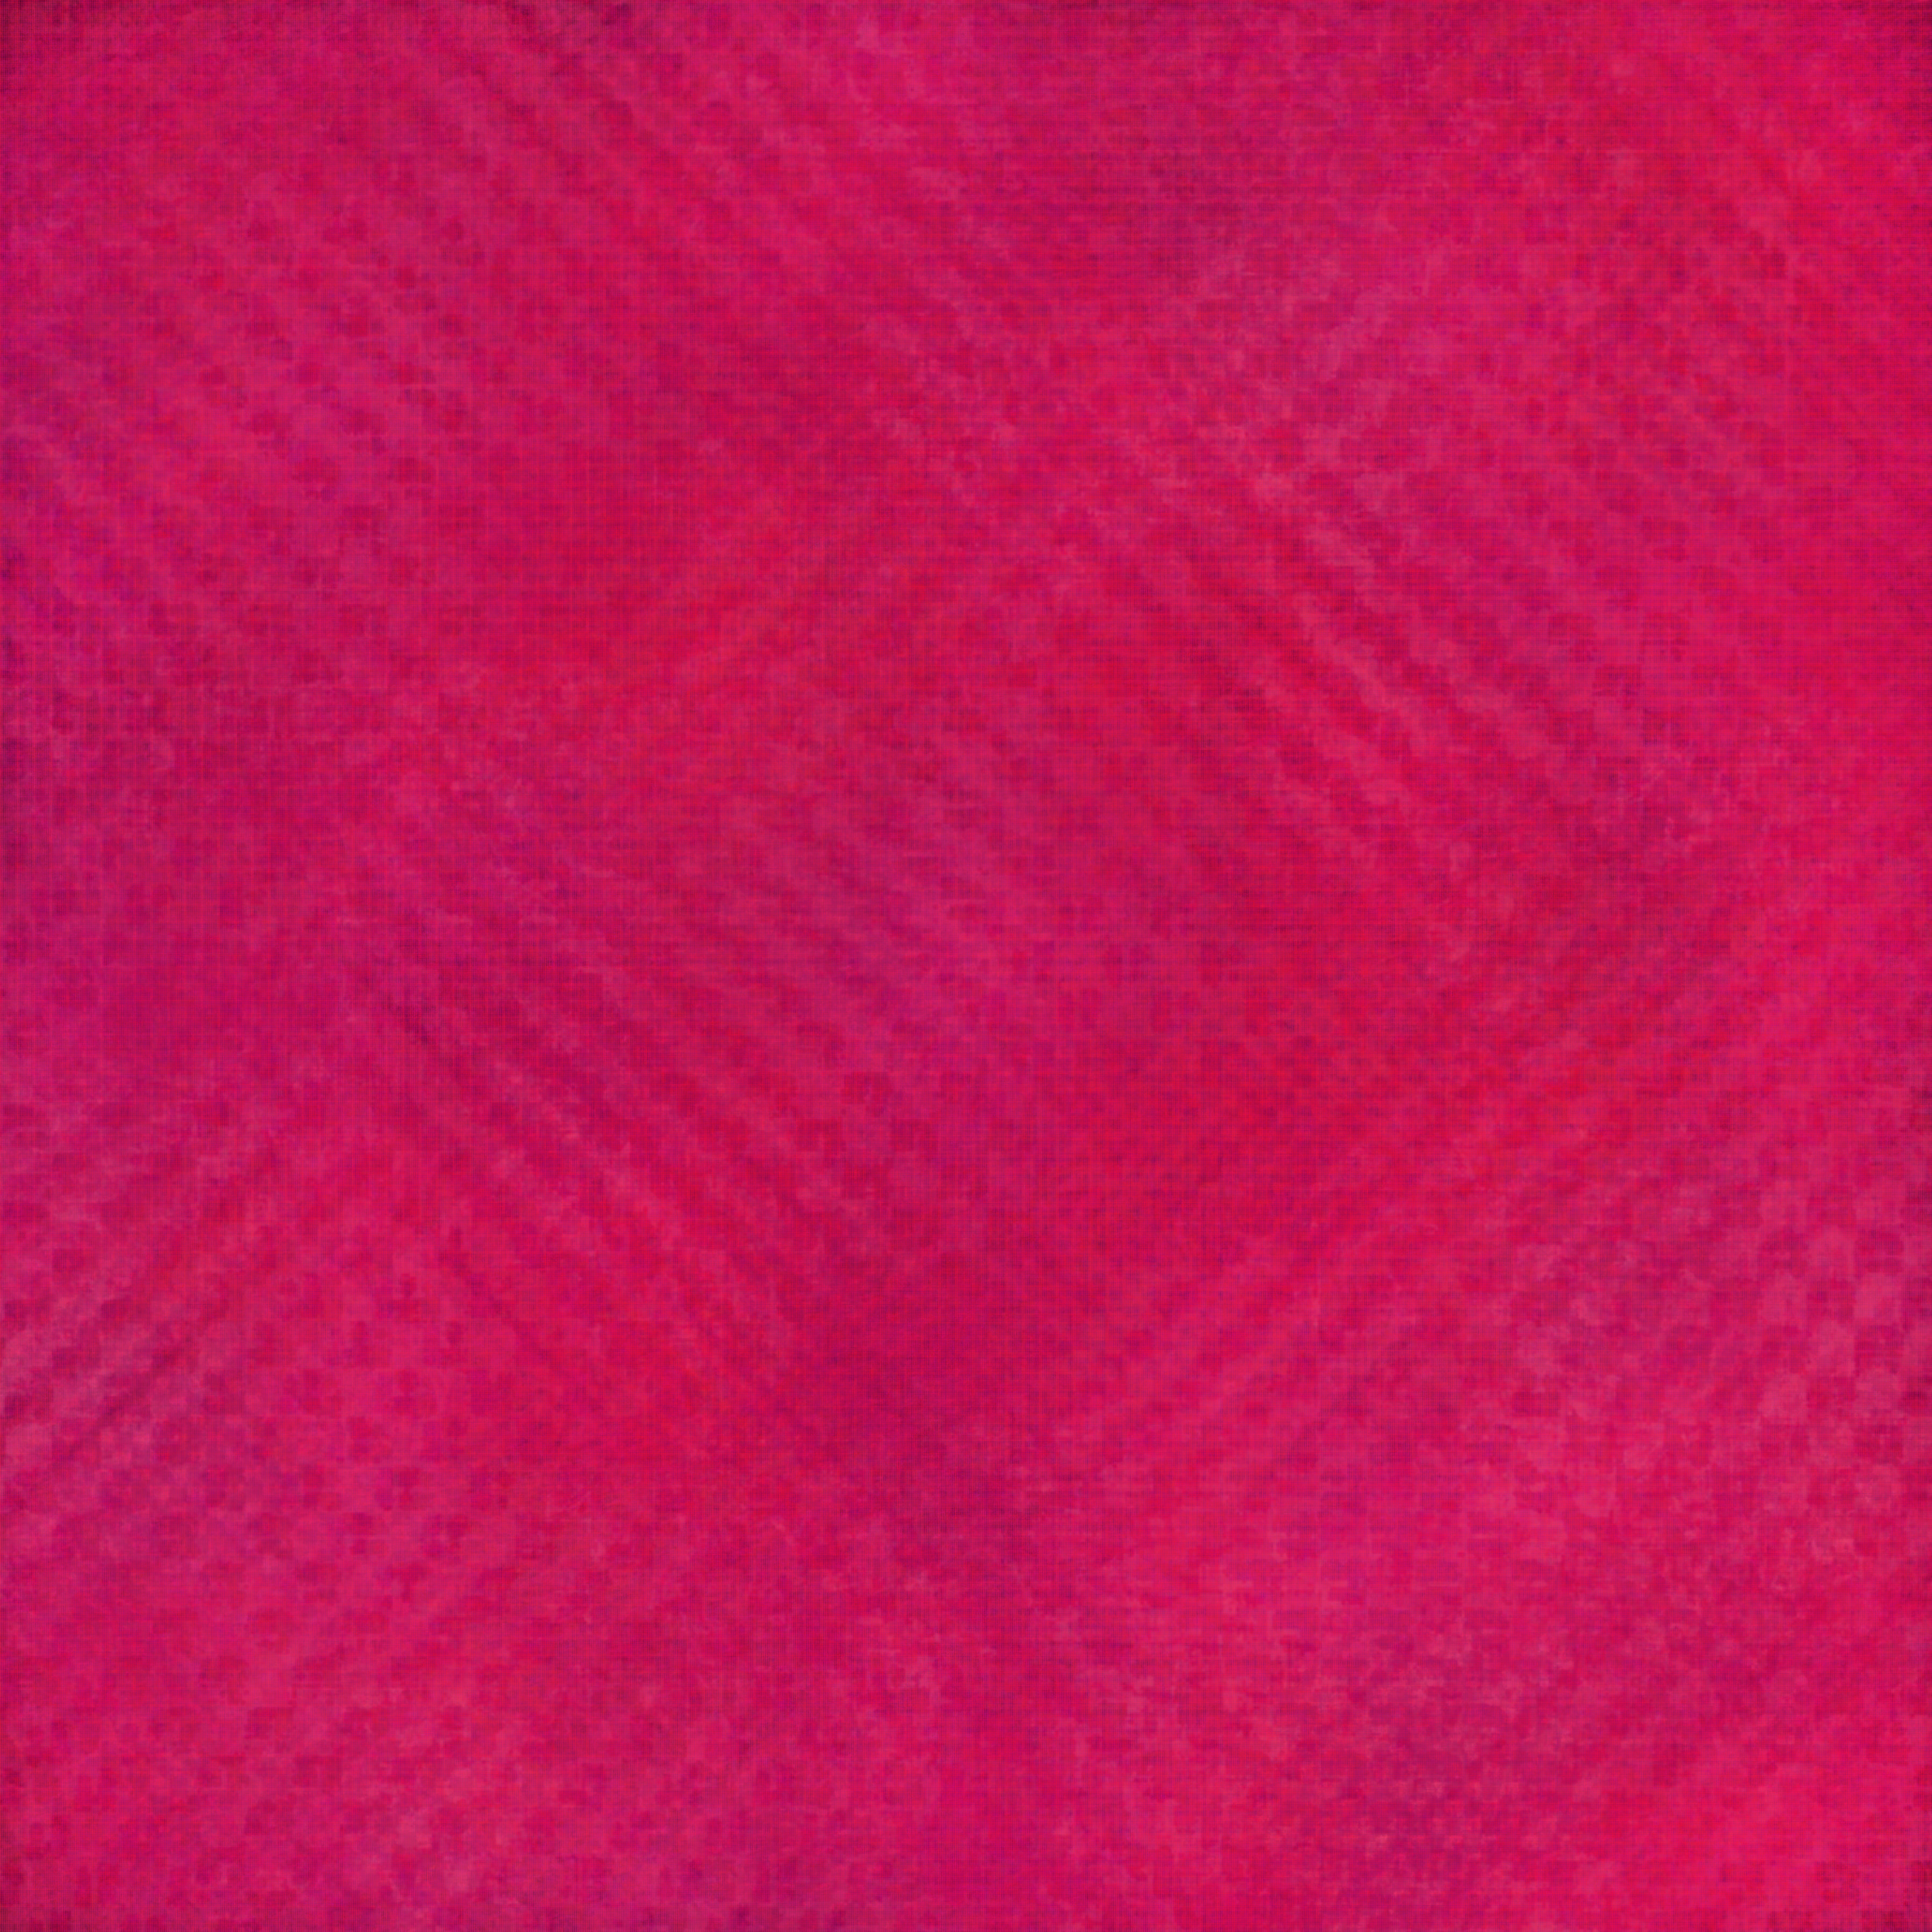 Pink grunge texture background image, free download